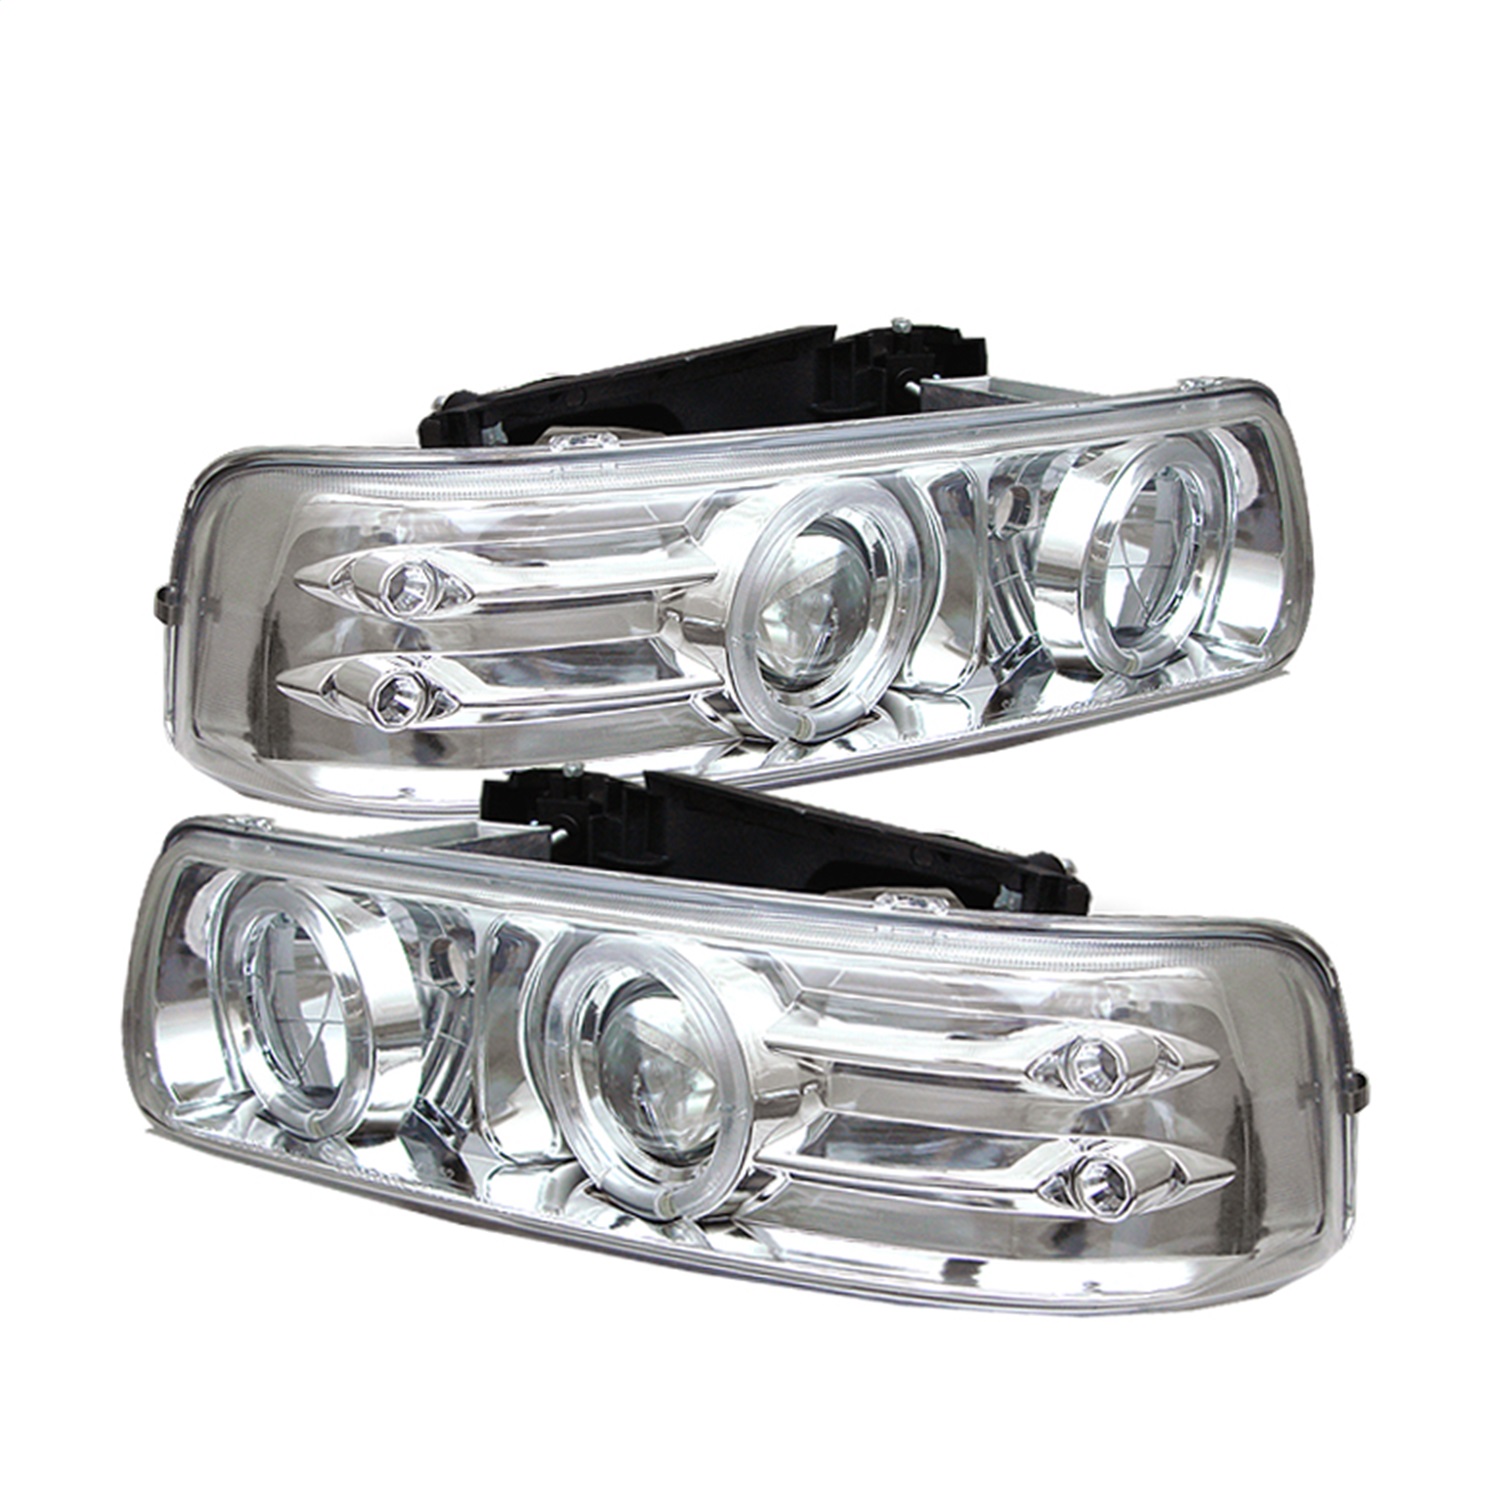 Spyder Auto 5009609 Halo LED Projector Headlights